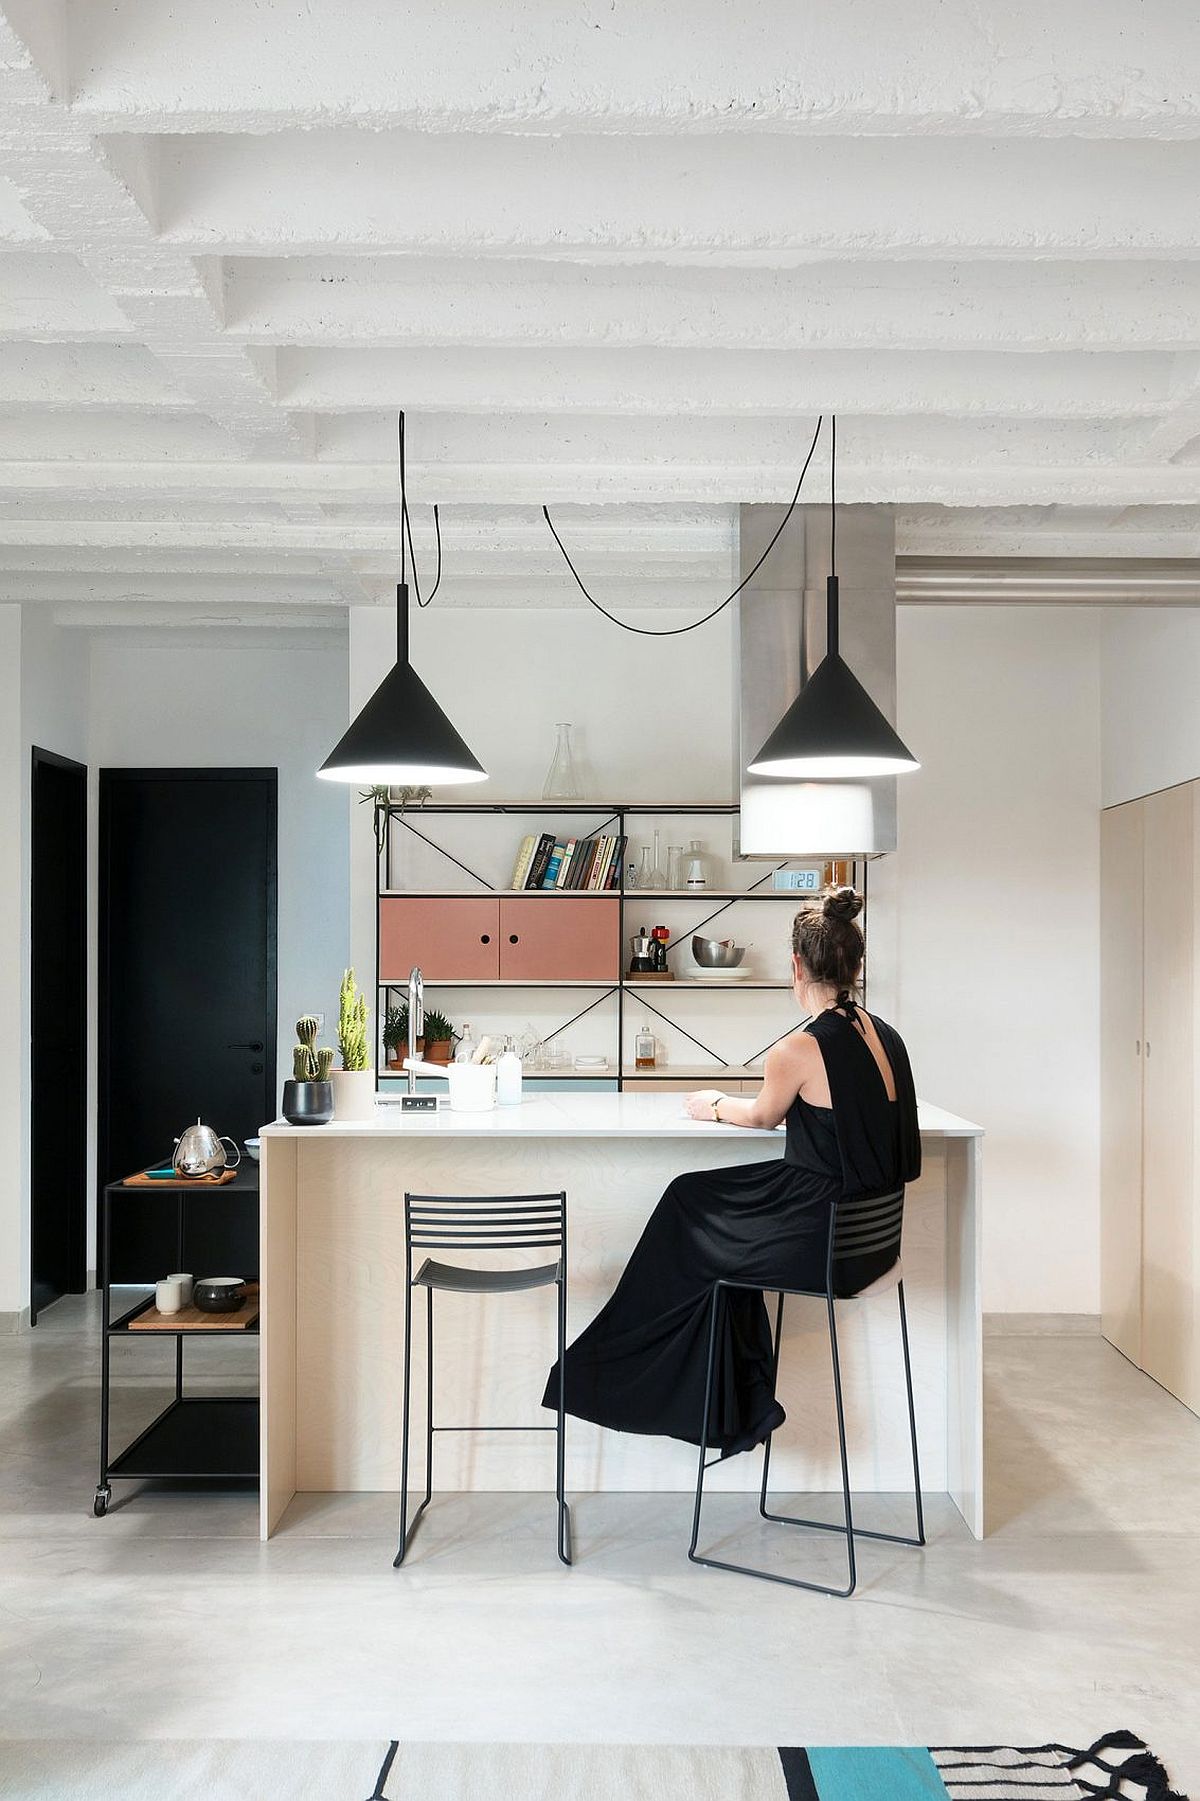 Custom kitchen island and decor for the apartment designed by Studio AUTORI